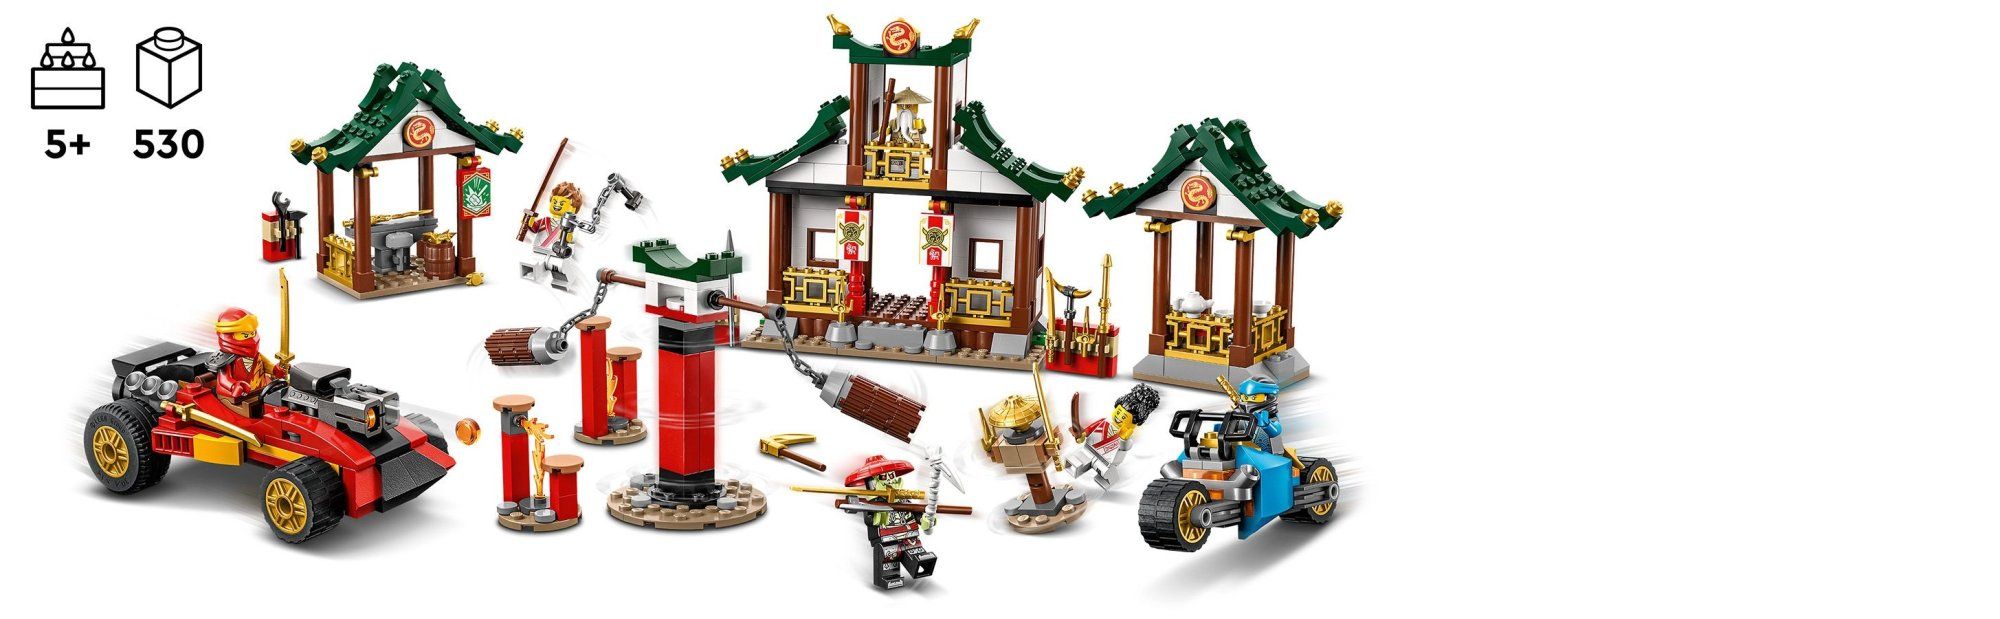 LEGO Ninjago 71787 Tvořivý nindža box